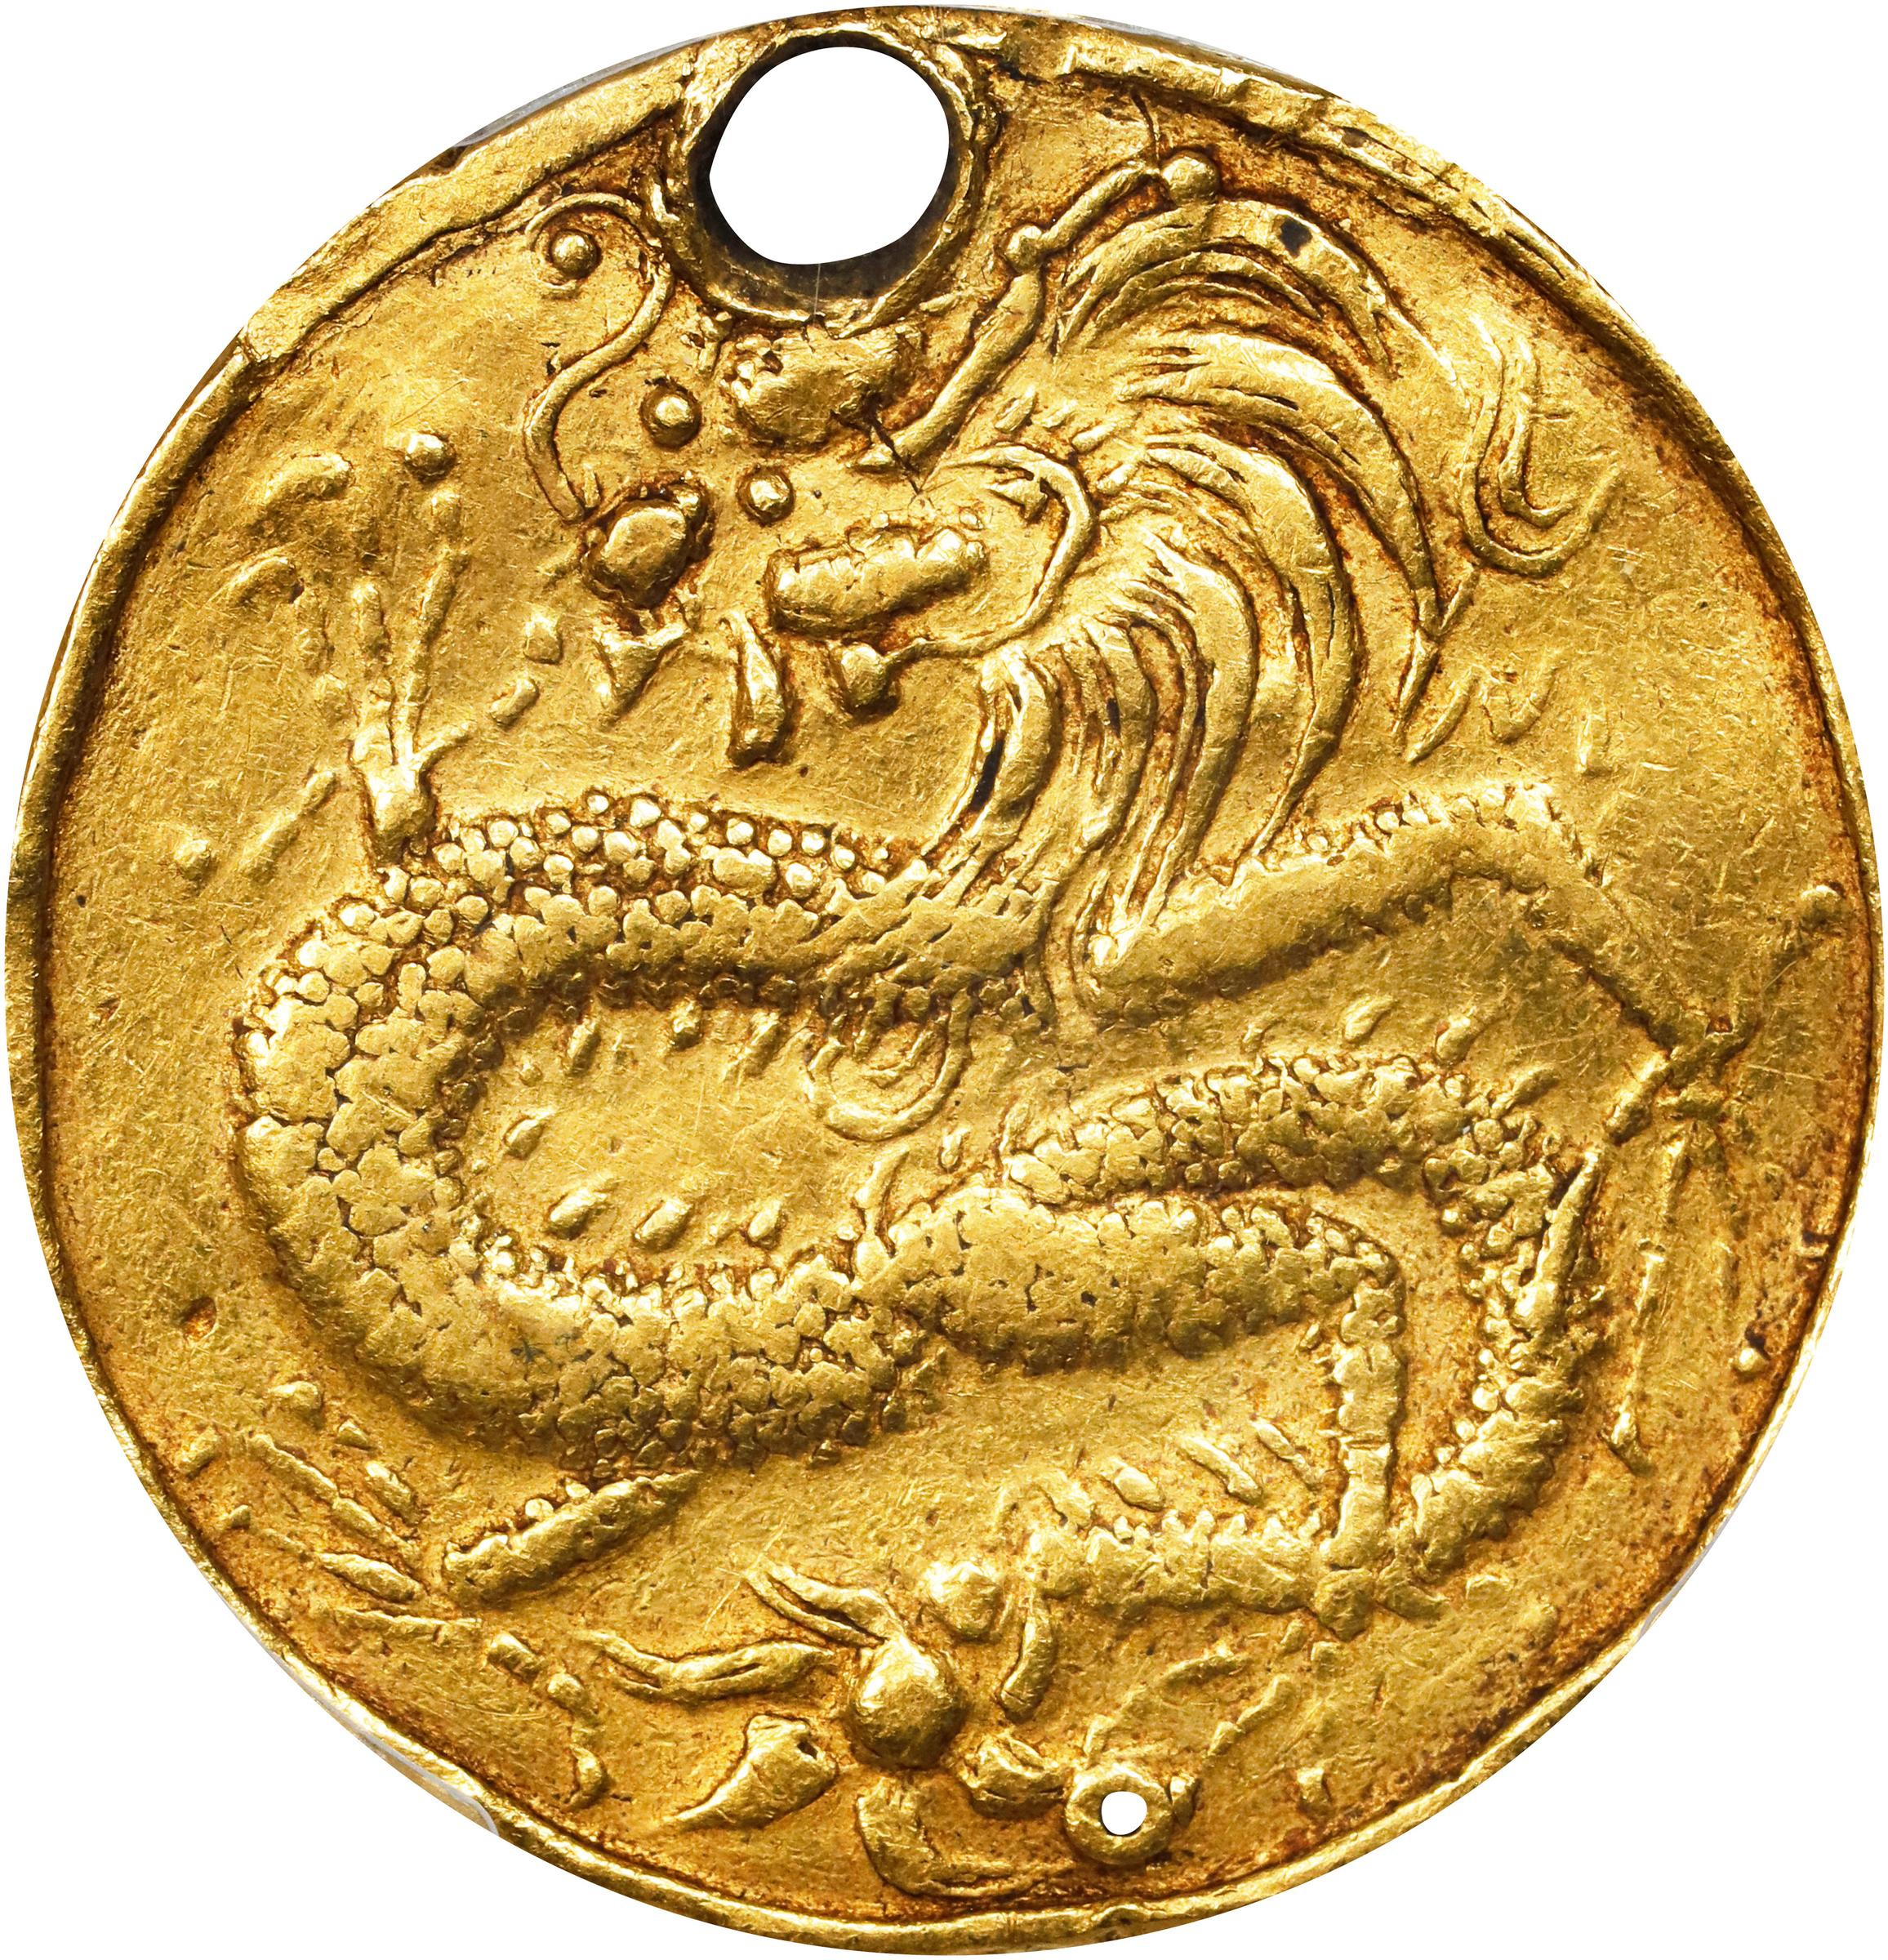 ANNAM. Gold 5 Tien, ND (1916-25). Khai Dinh. PCGS Genuine--Holed 